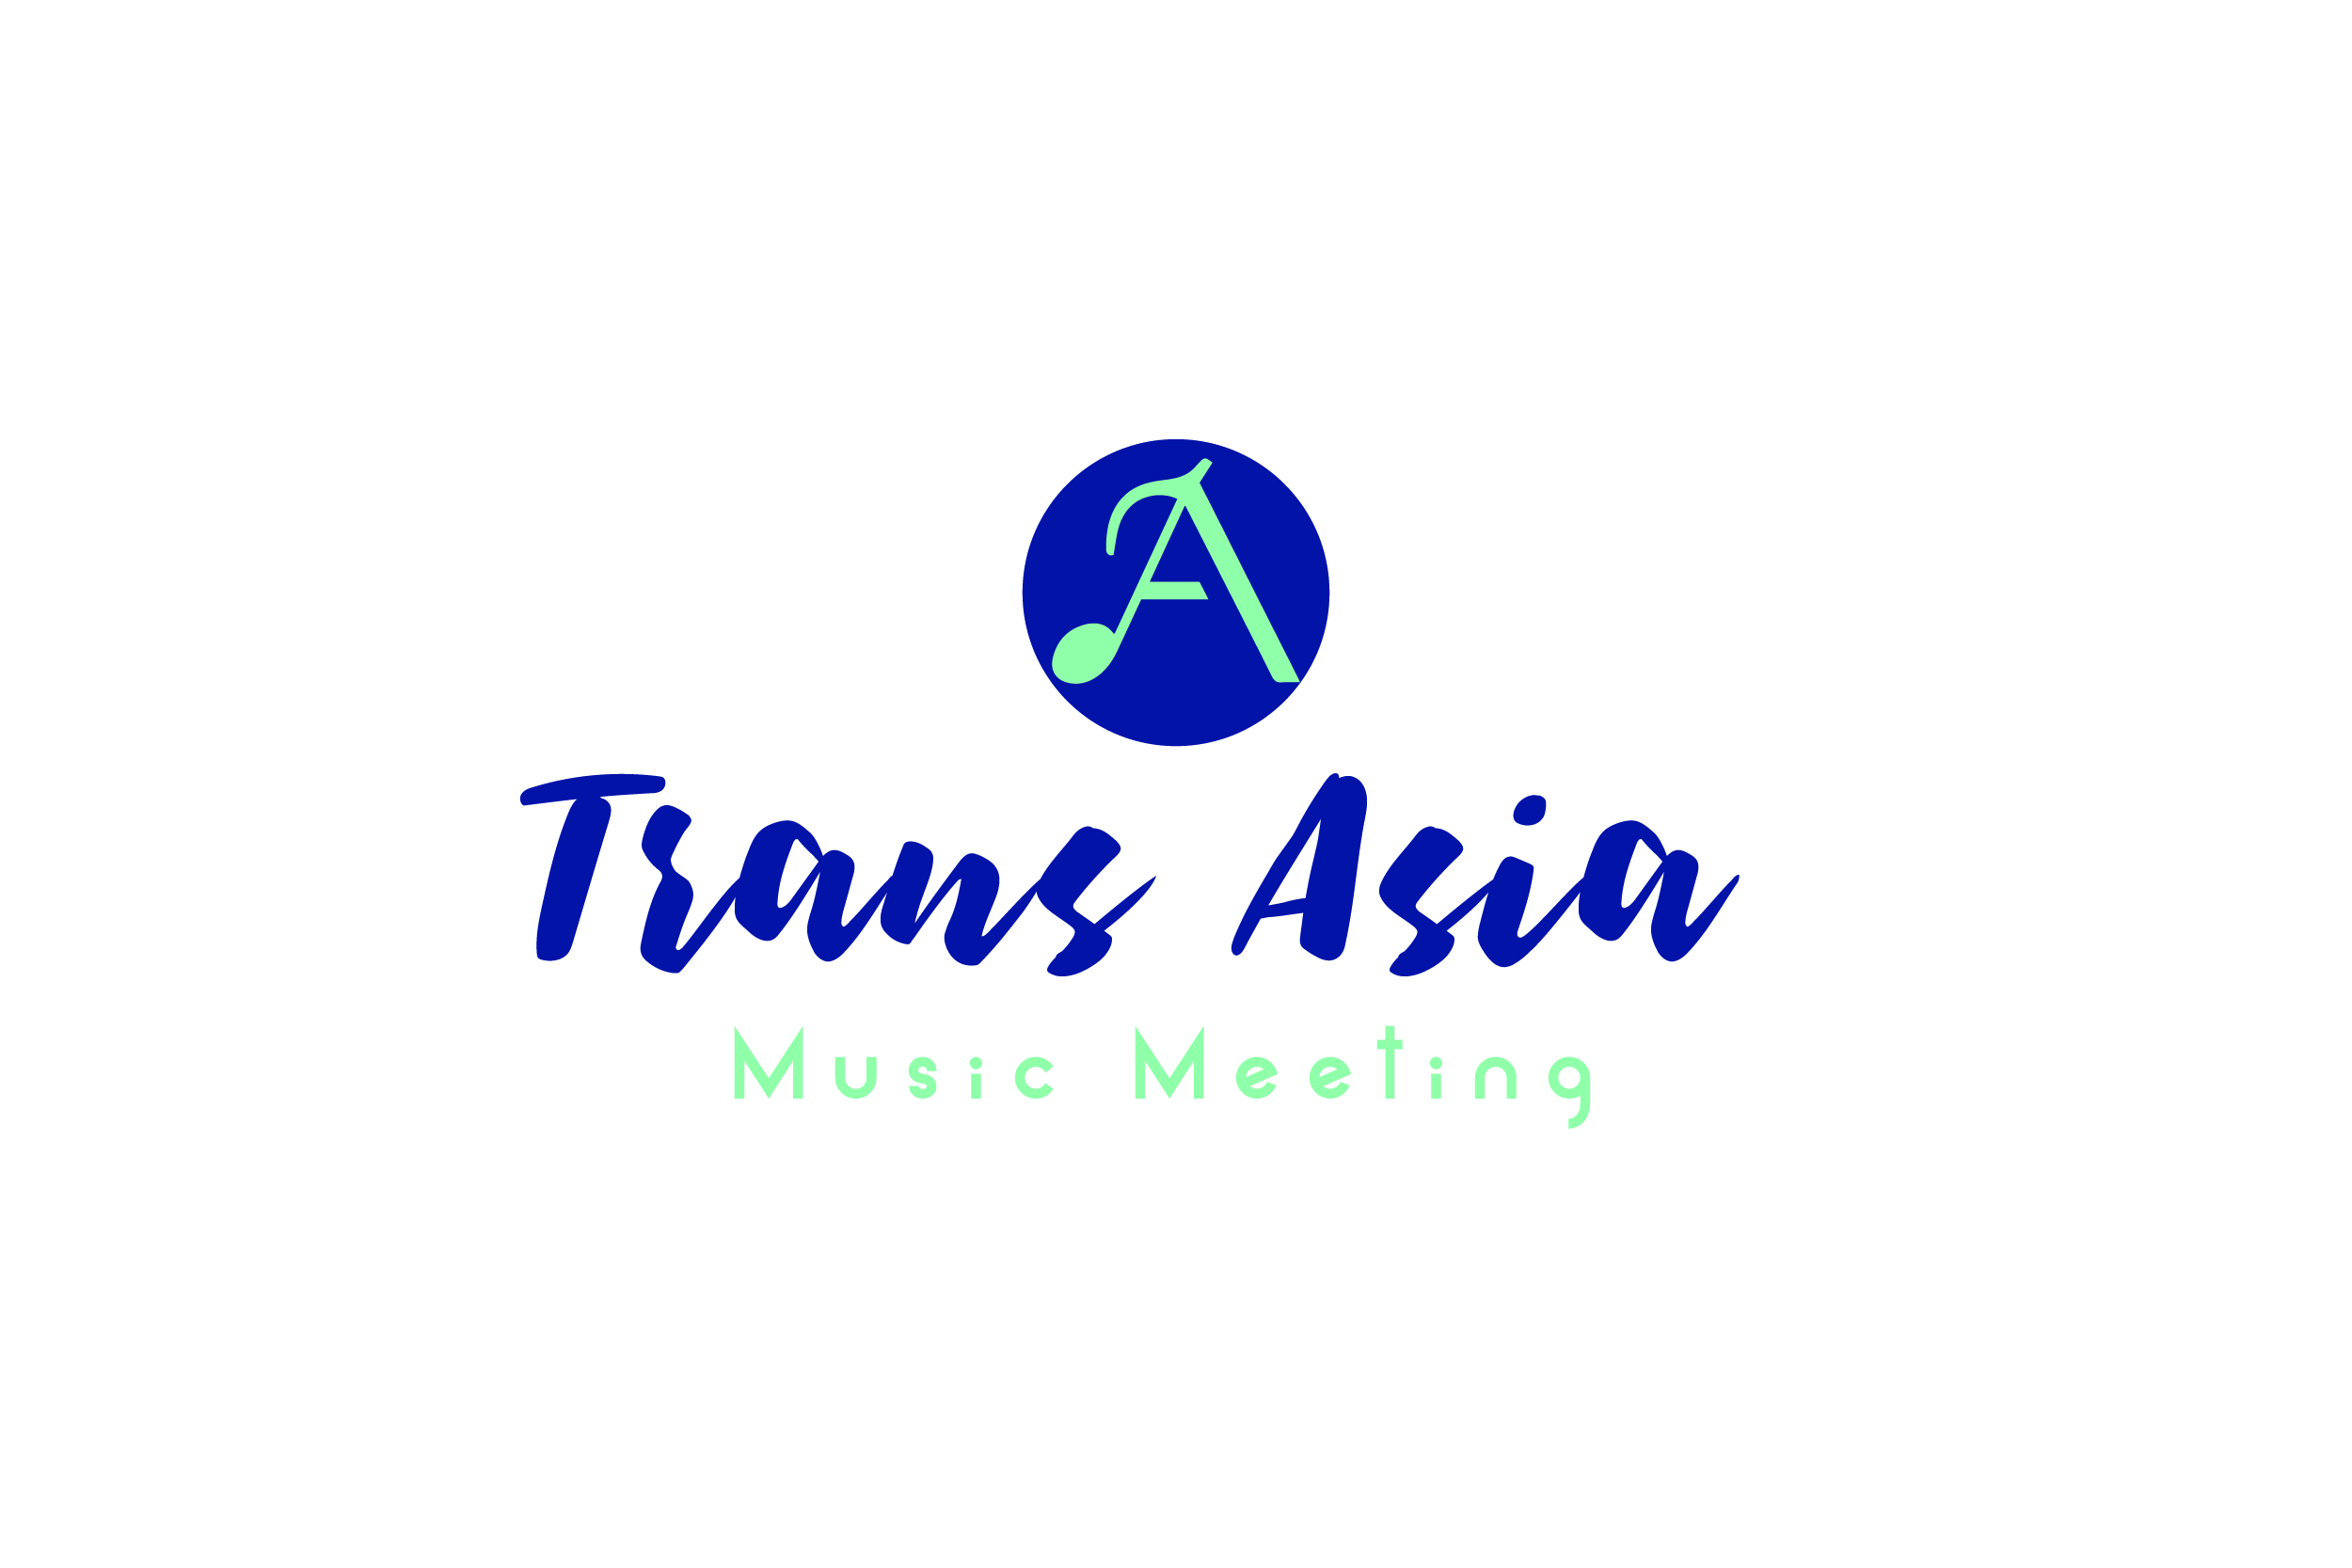 【Trans Asia Music Meeting delegates announcement】